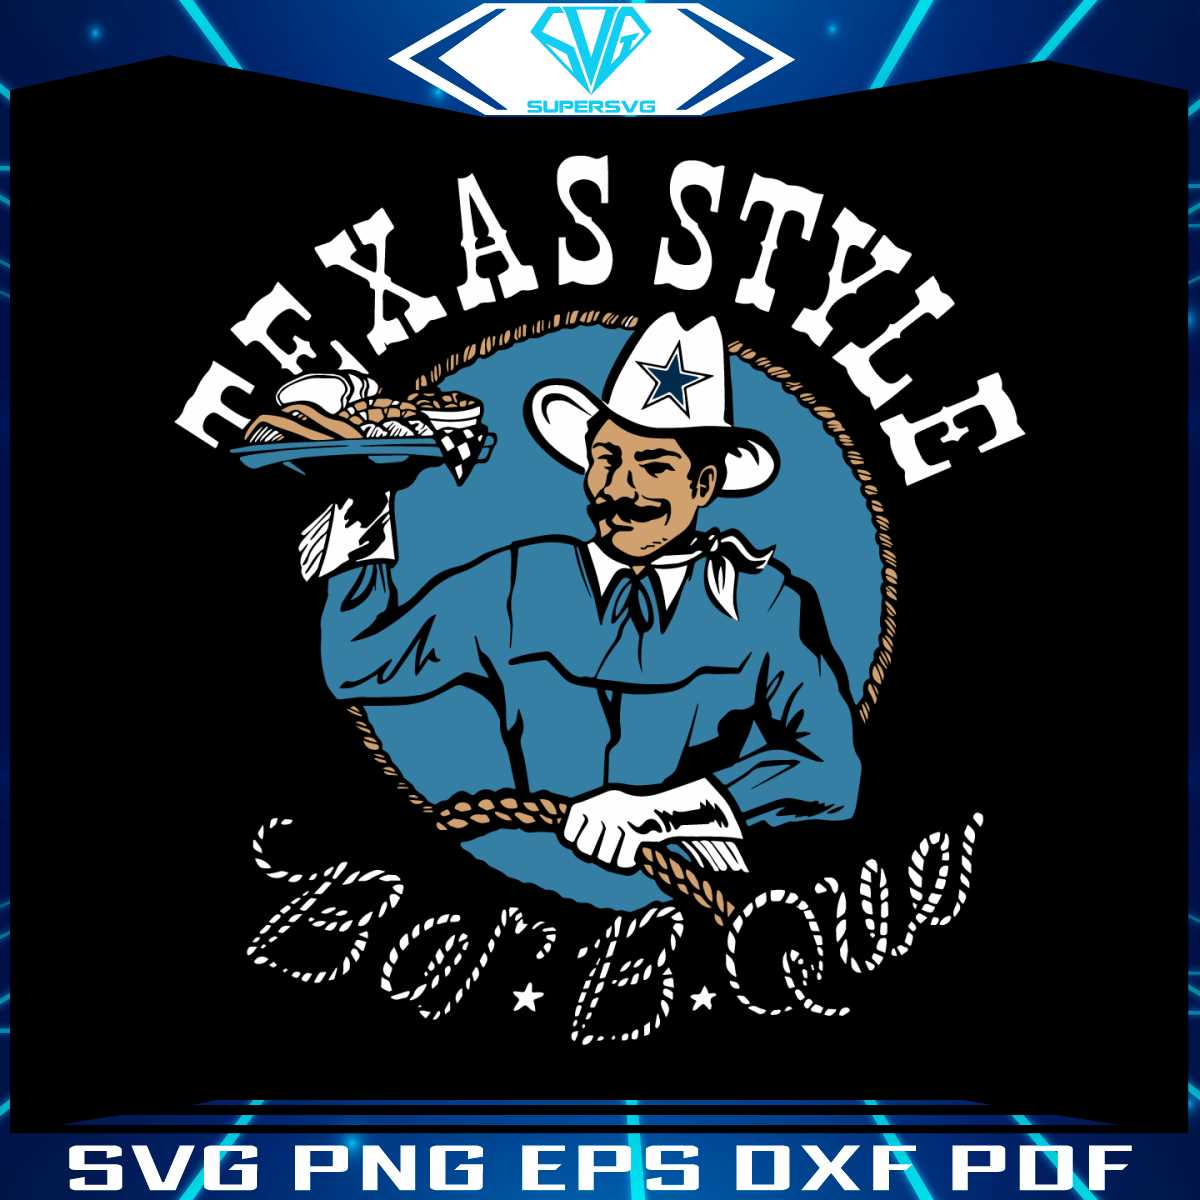 nfl-texas-style-flavortown-dallas-cowboys-svg-cutting-file